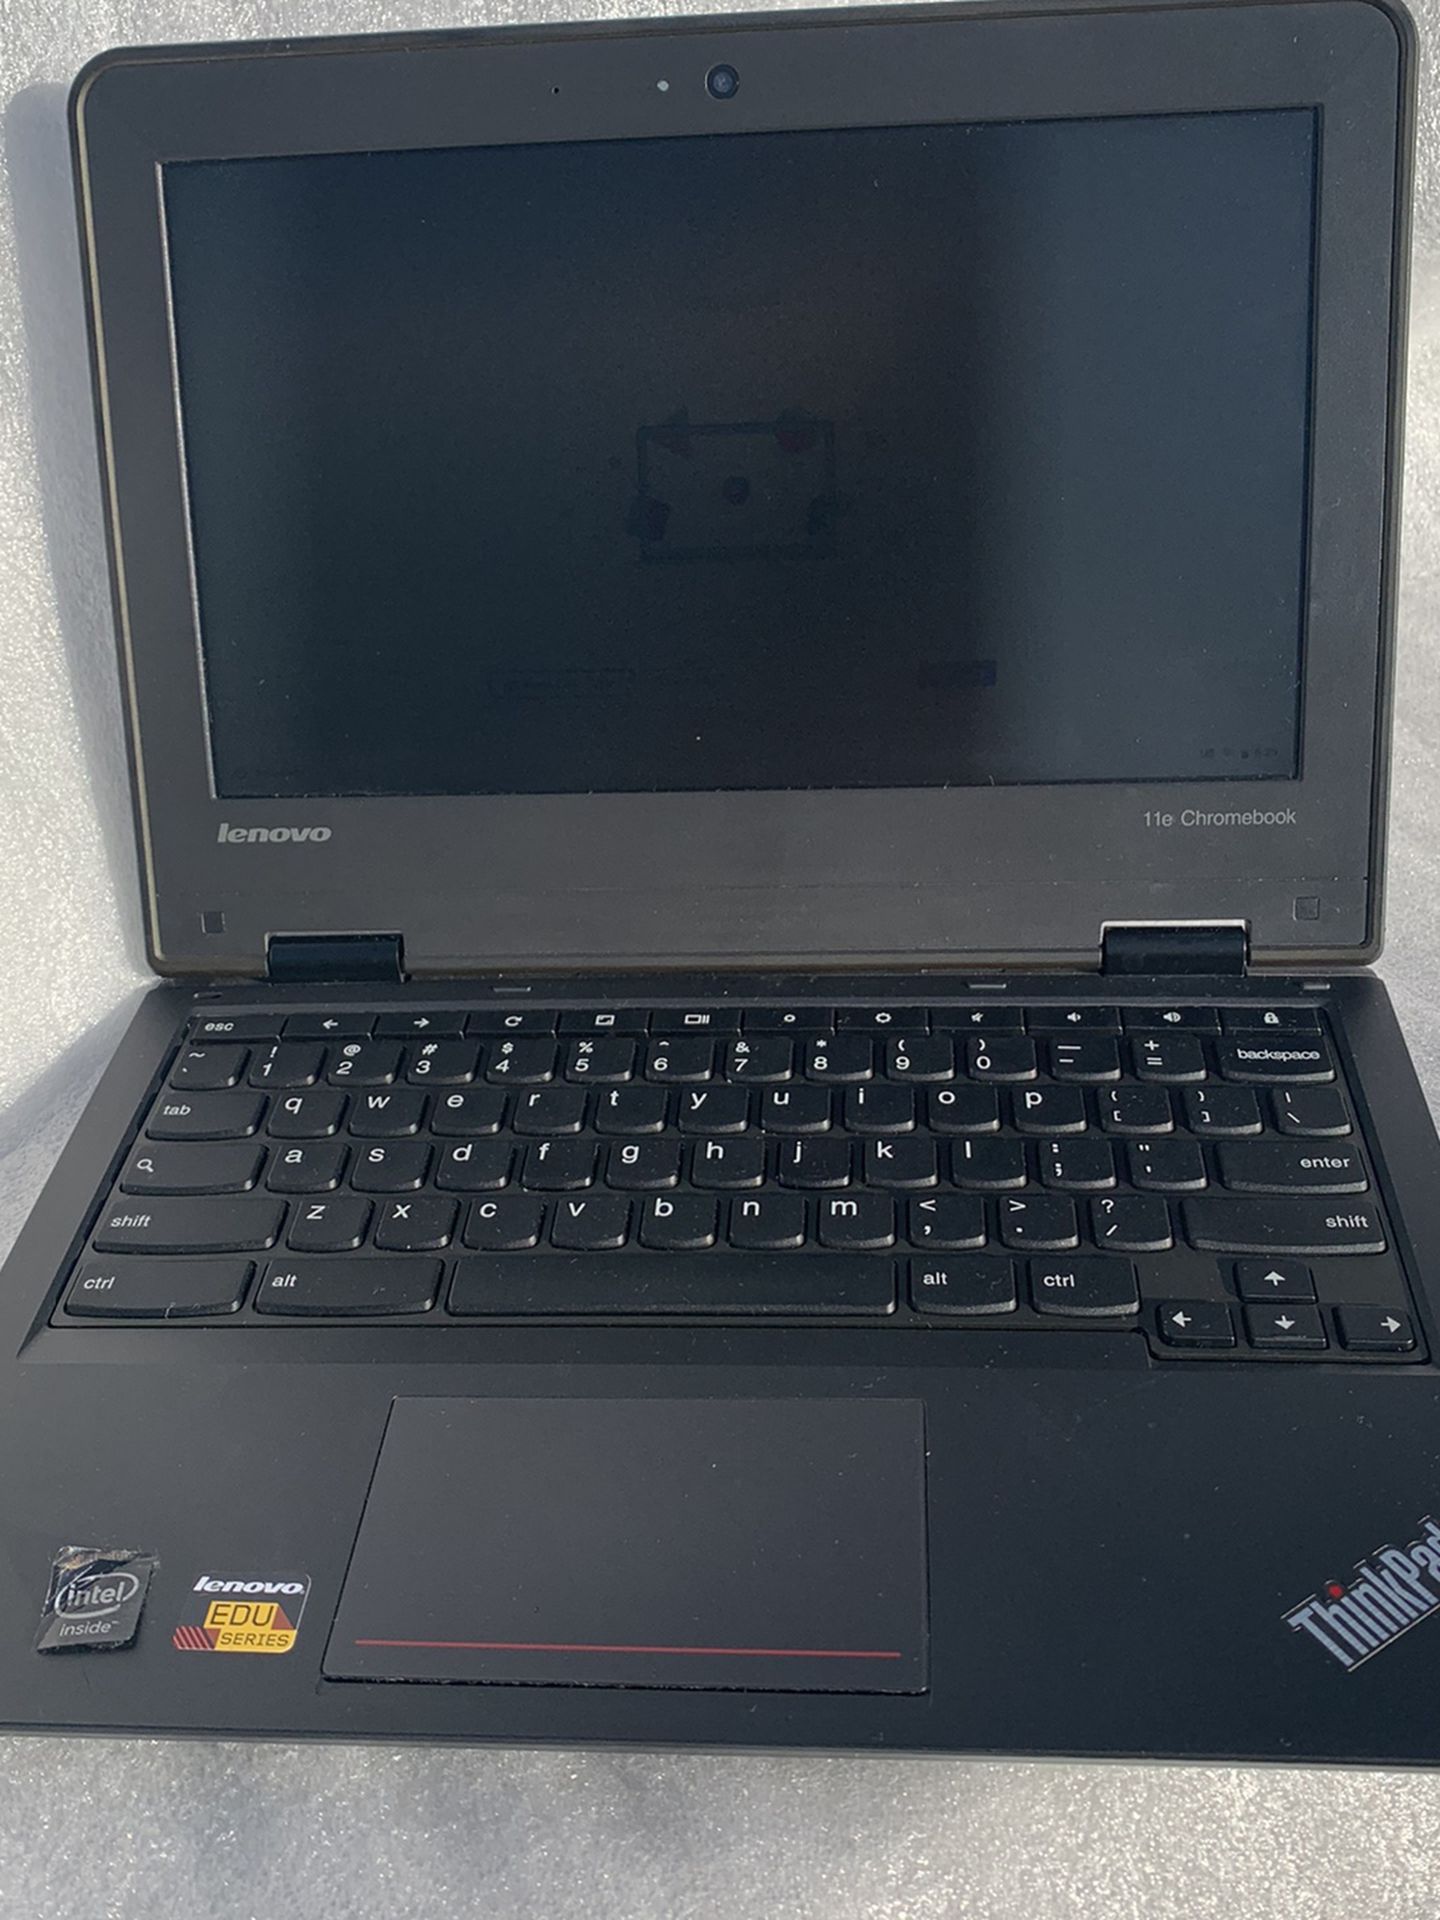 Lenovo ThinkPad 11e Edu Series — 1st Generation Chromebooks